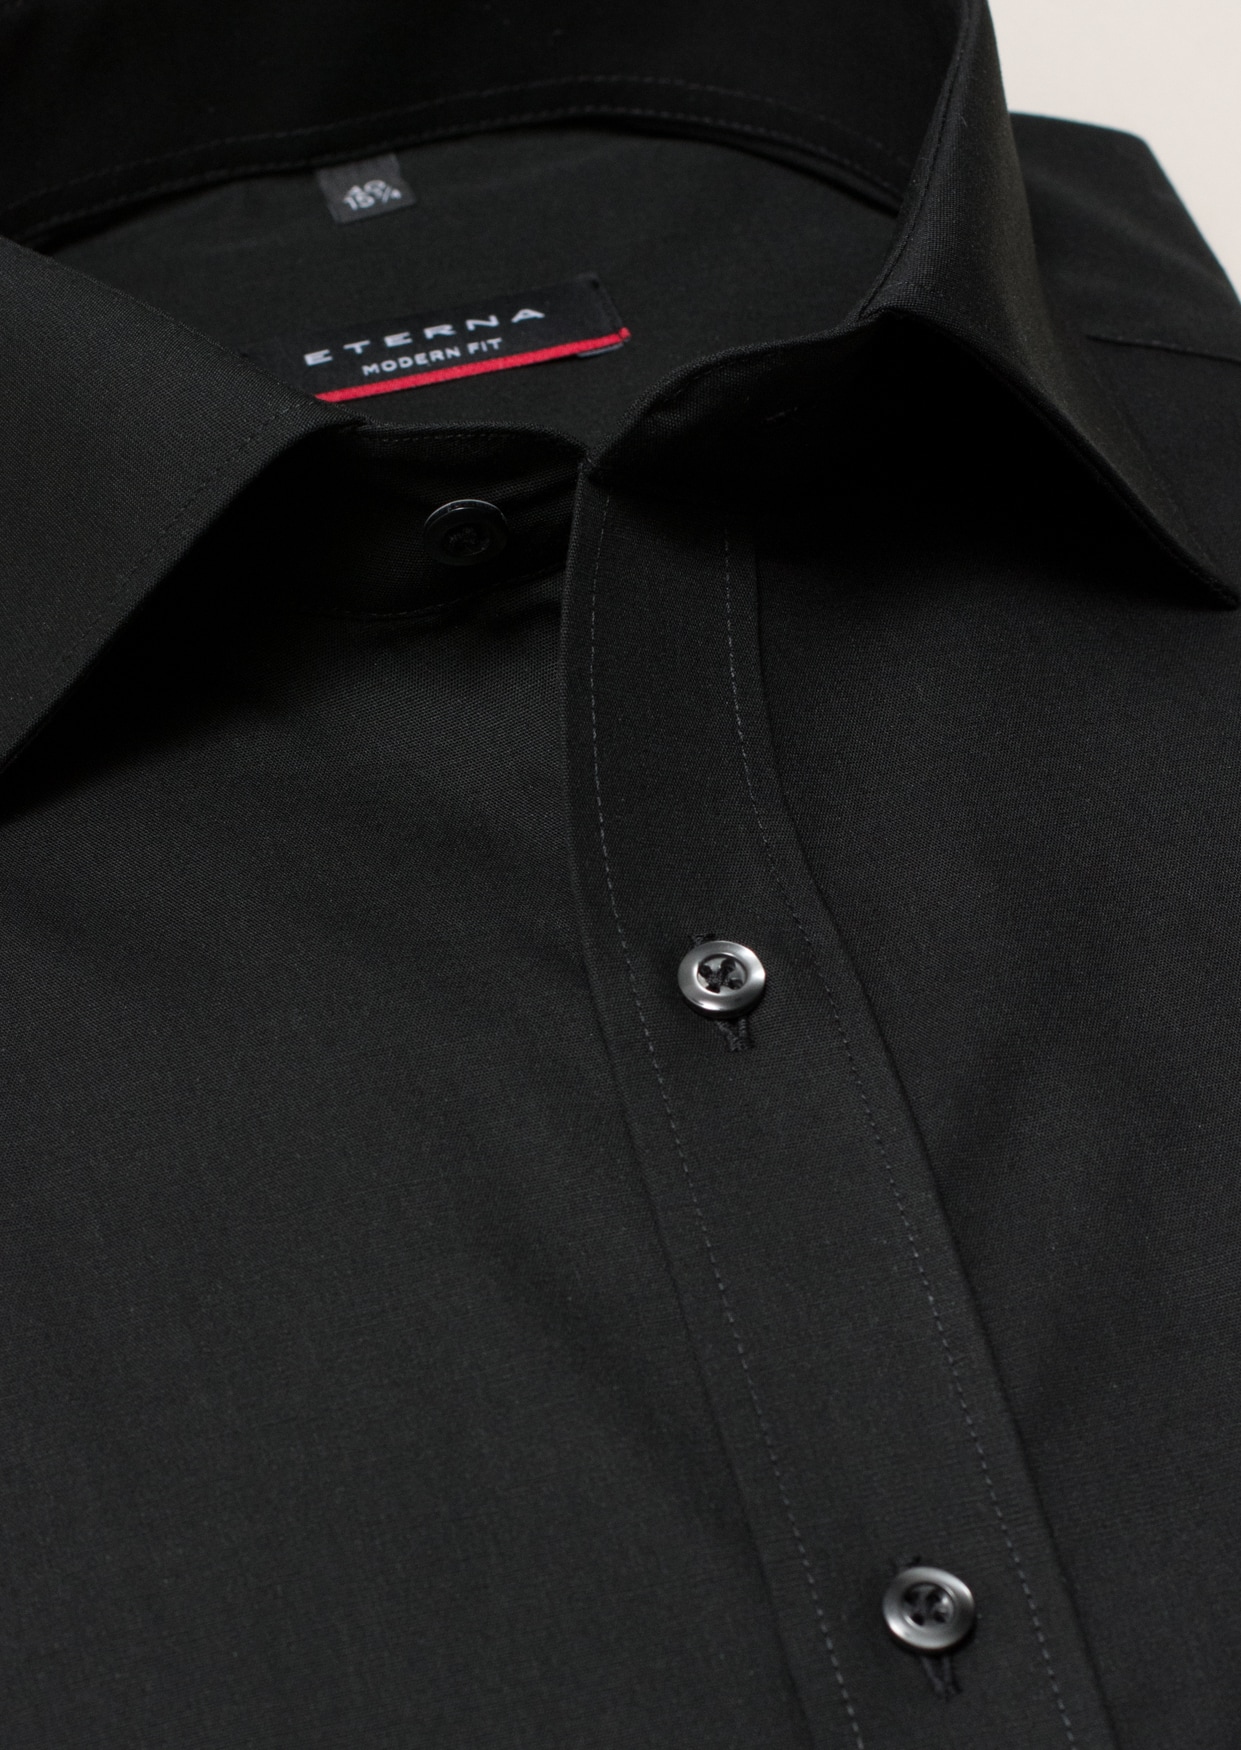 | MODERN schwarz in 41 Langarm 1SH00113-03-91-41-1/1 | FIT unifarben | schwarz | Shirt Original